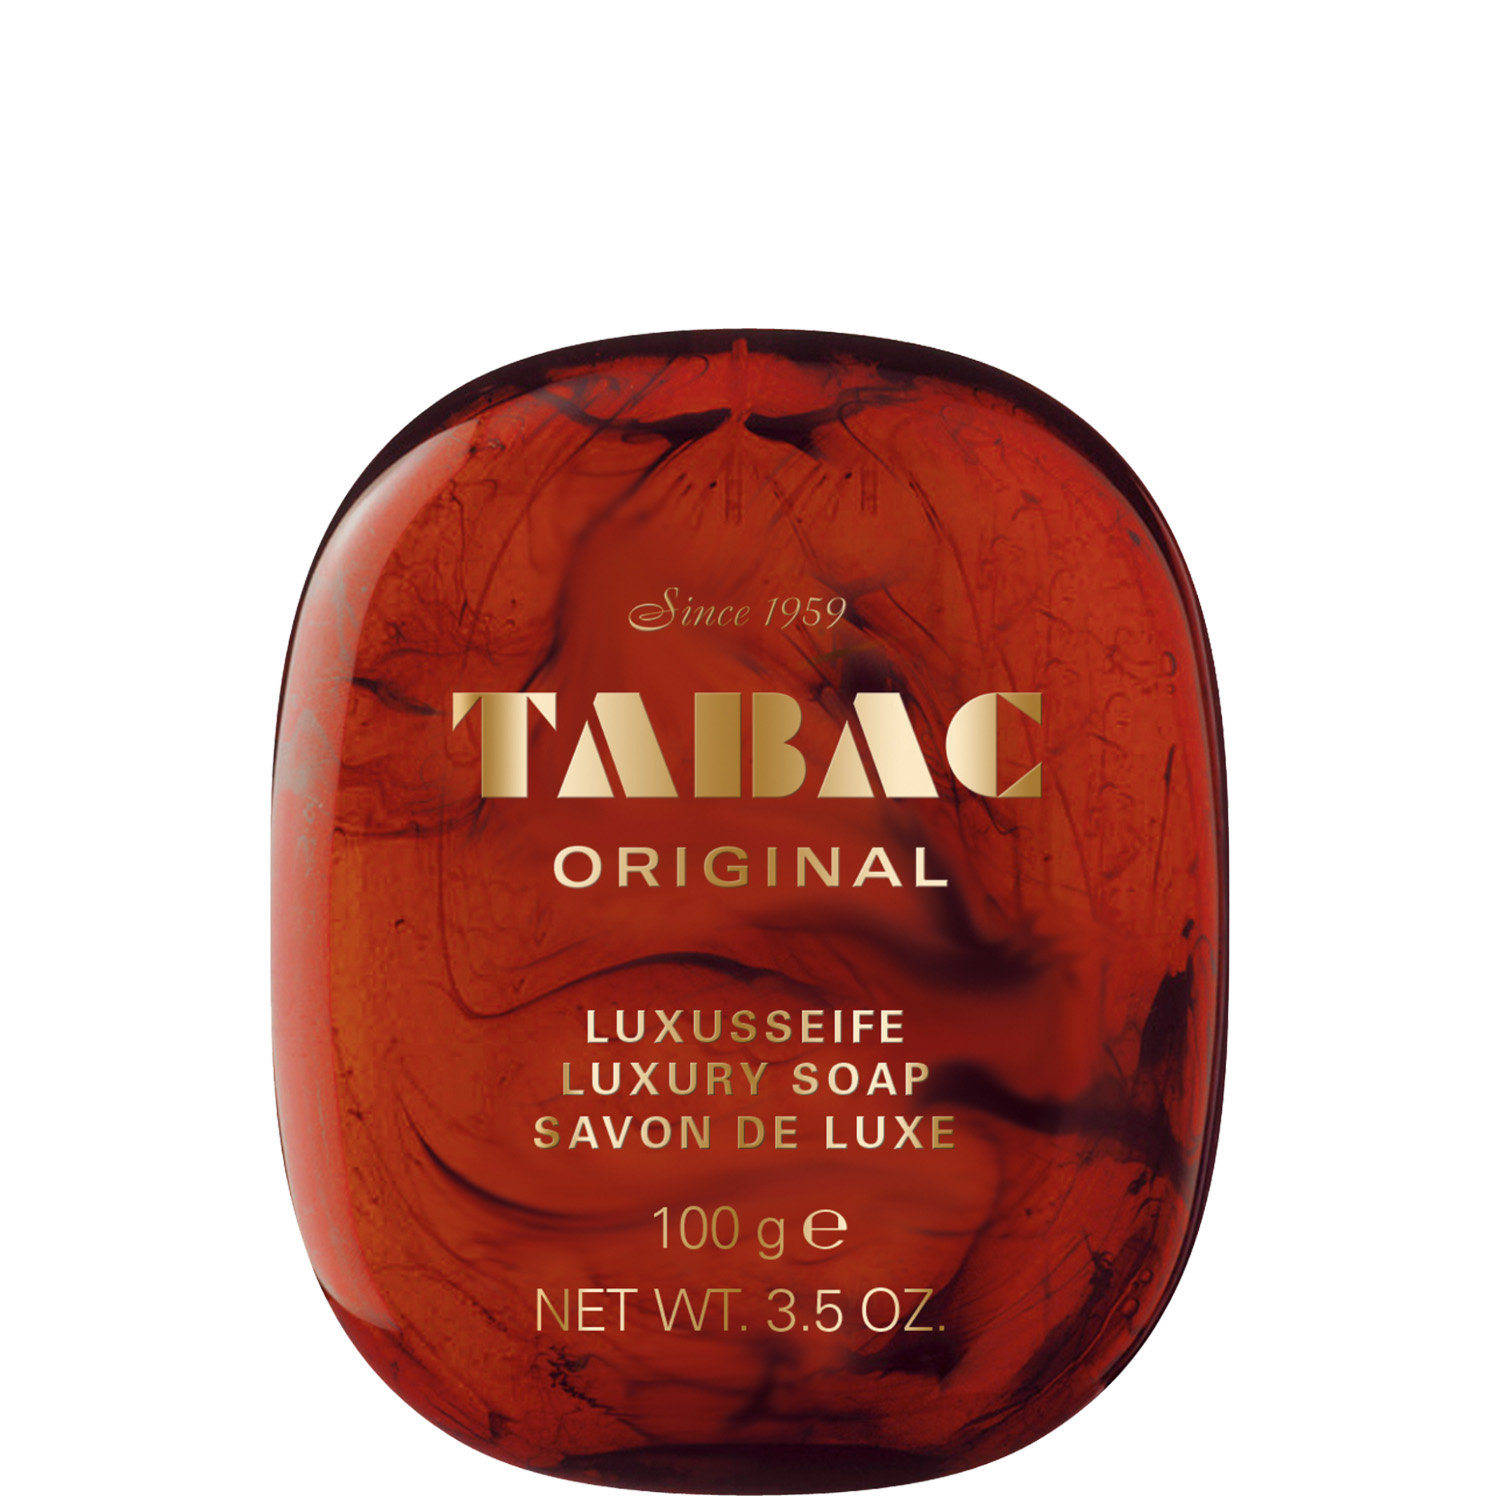 Tabac Original Luxusseife Dose 100g